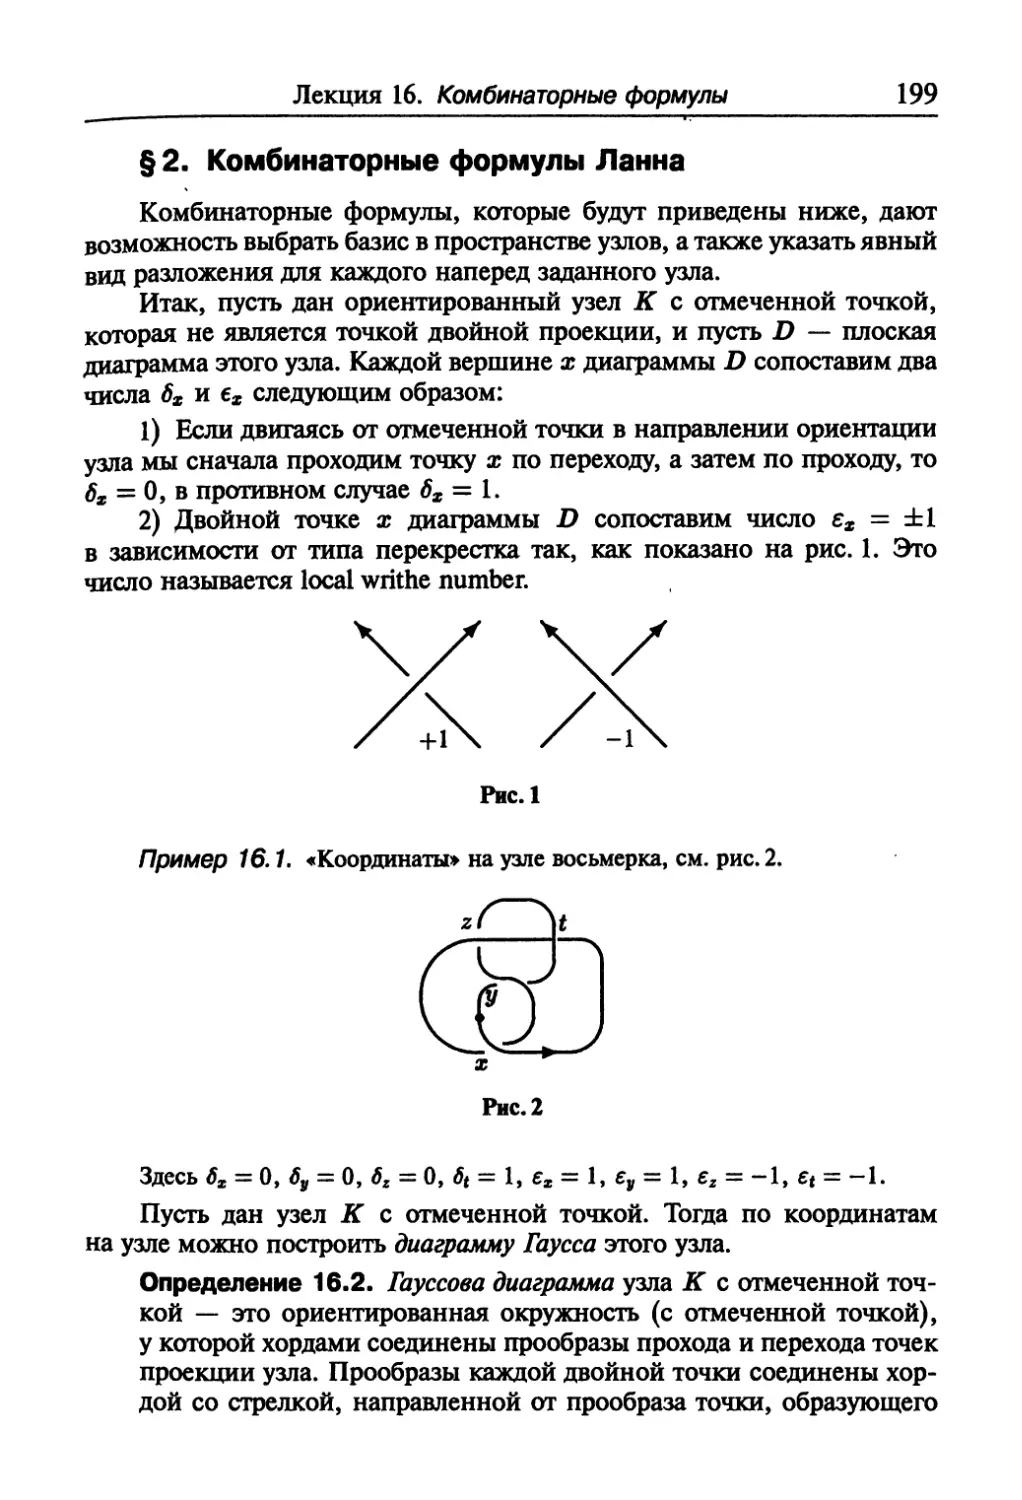 § 2. комбинаторные формулы Ланна